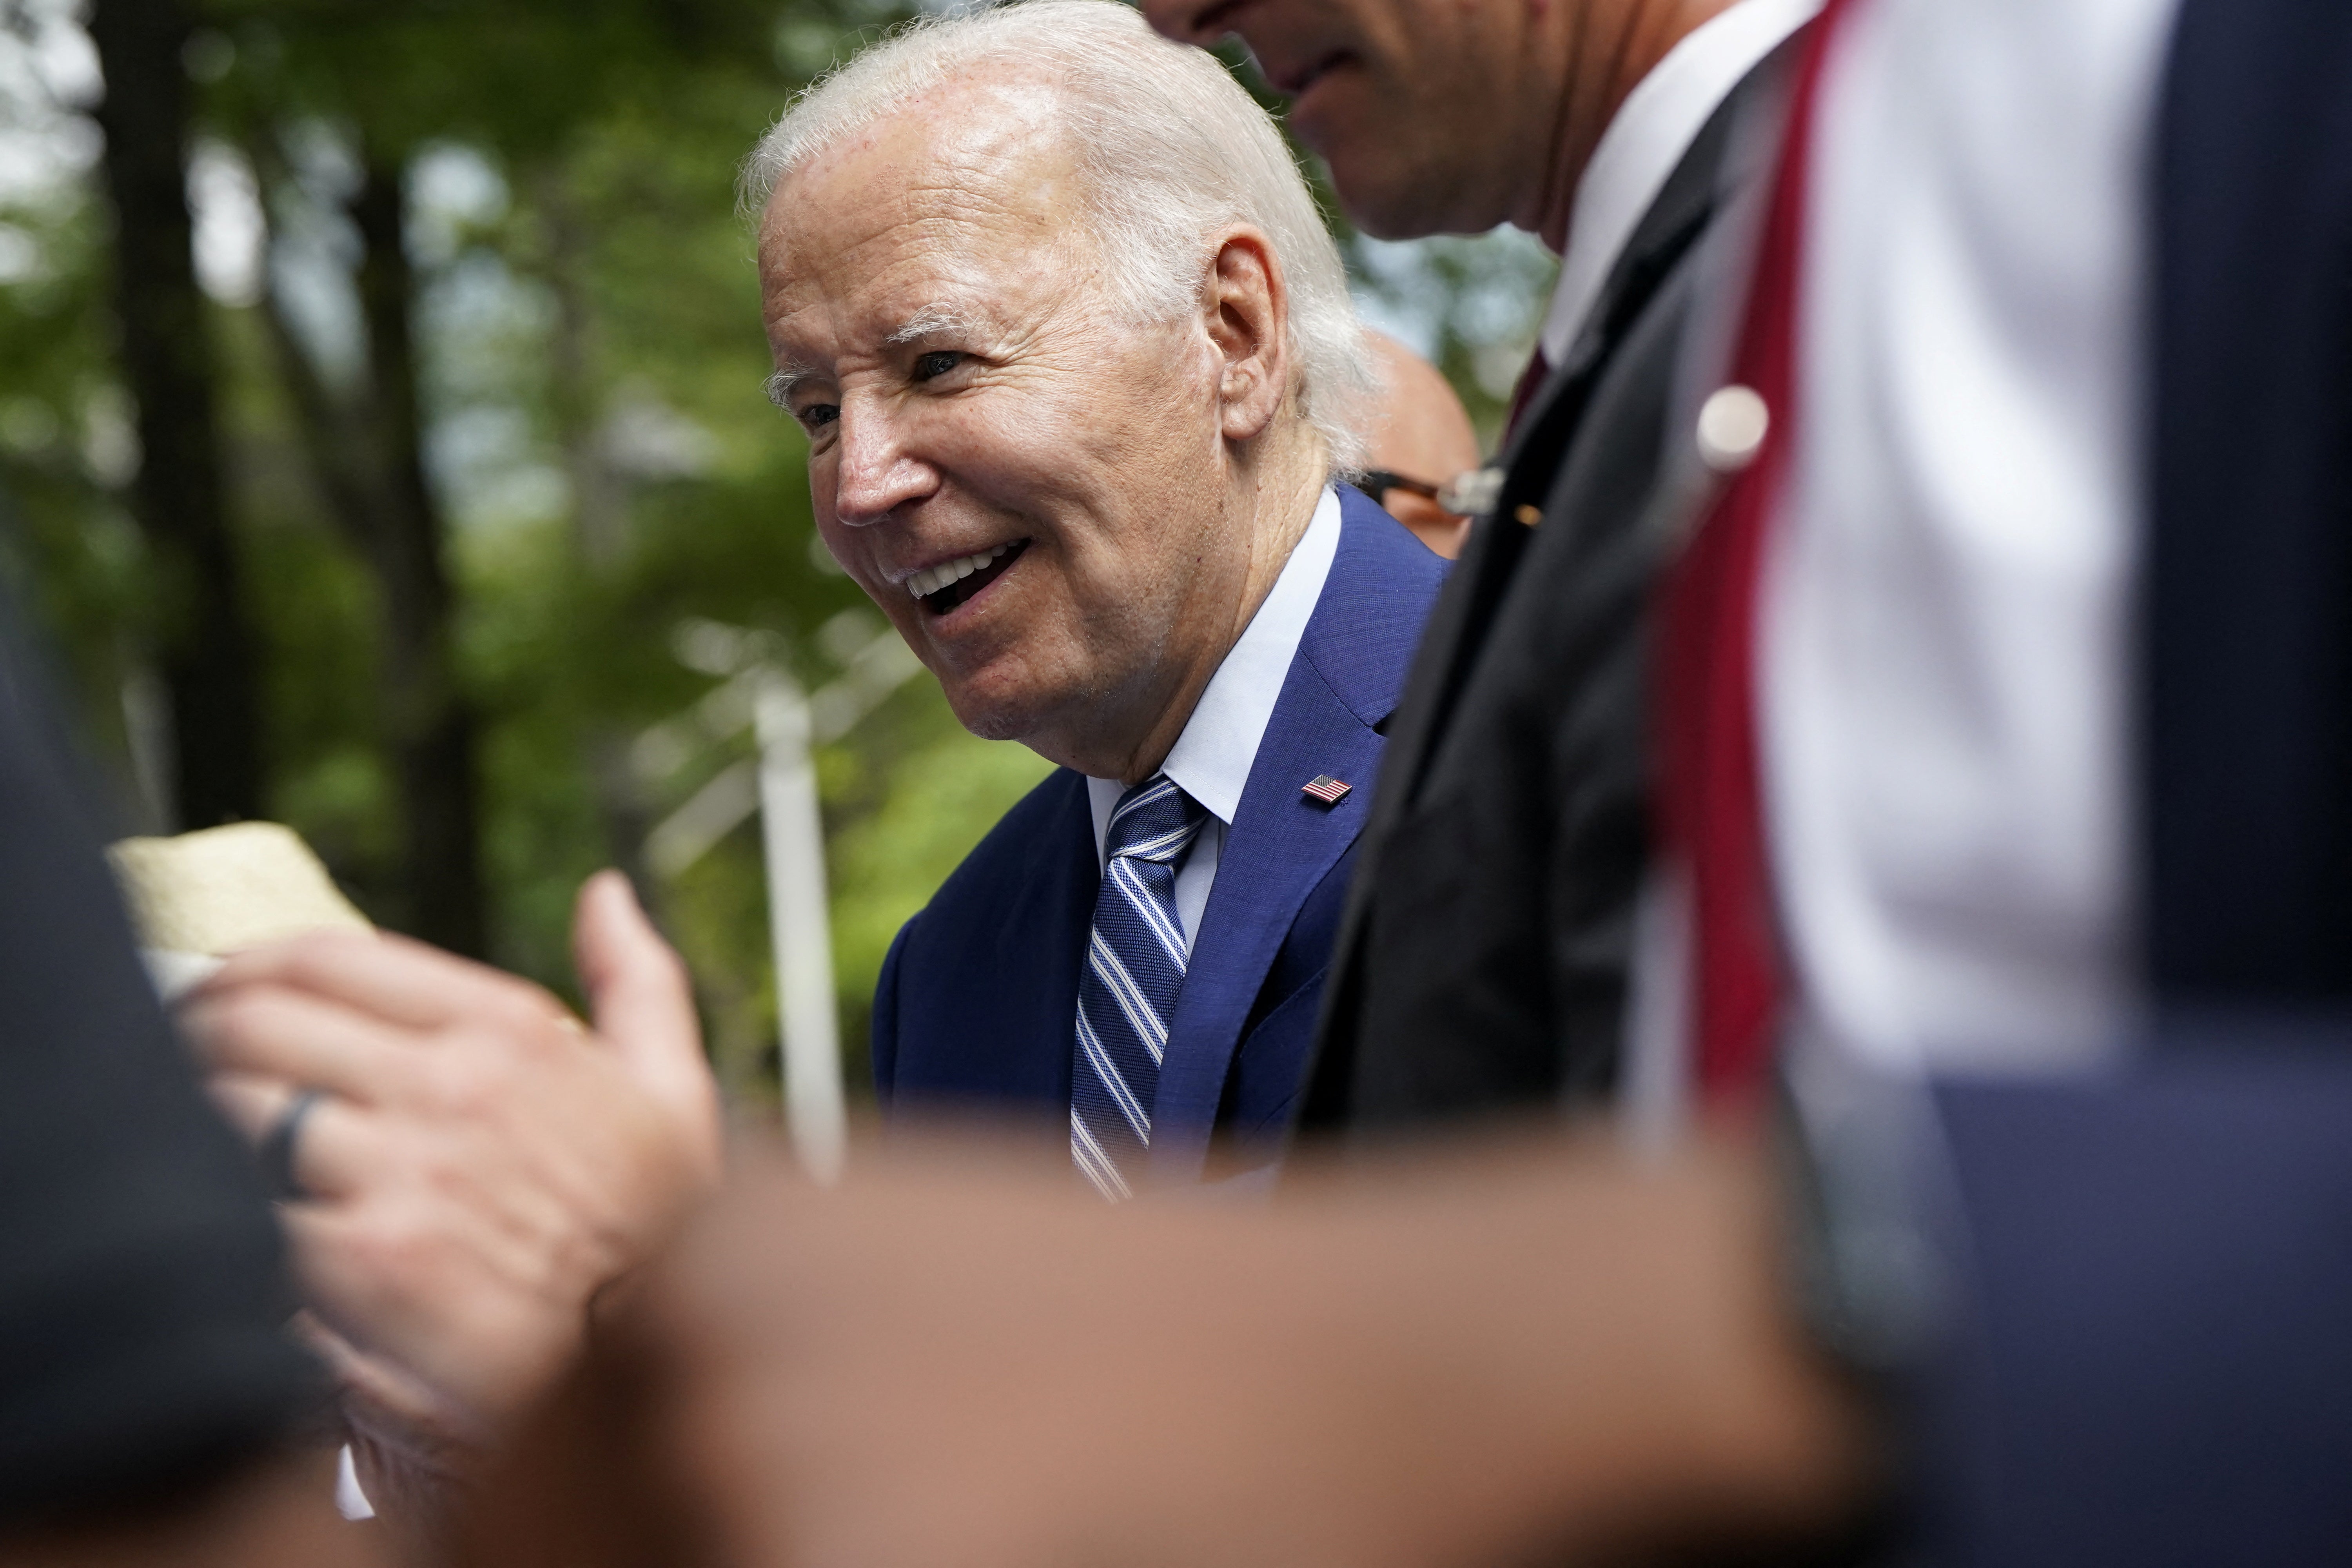 President Joe Biden greets supporters in Atlanta on June 27 ahead of the first presidential debate against Donald Trump